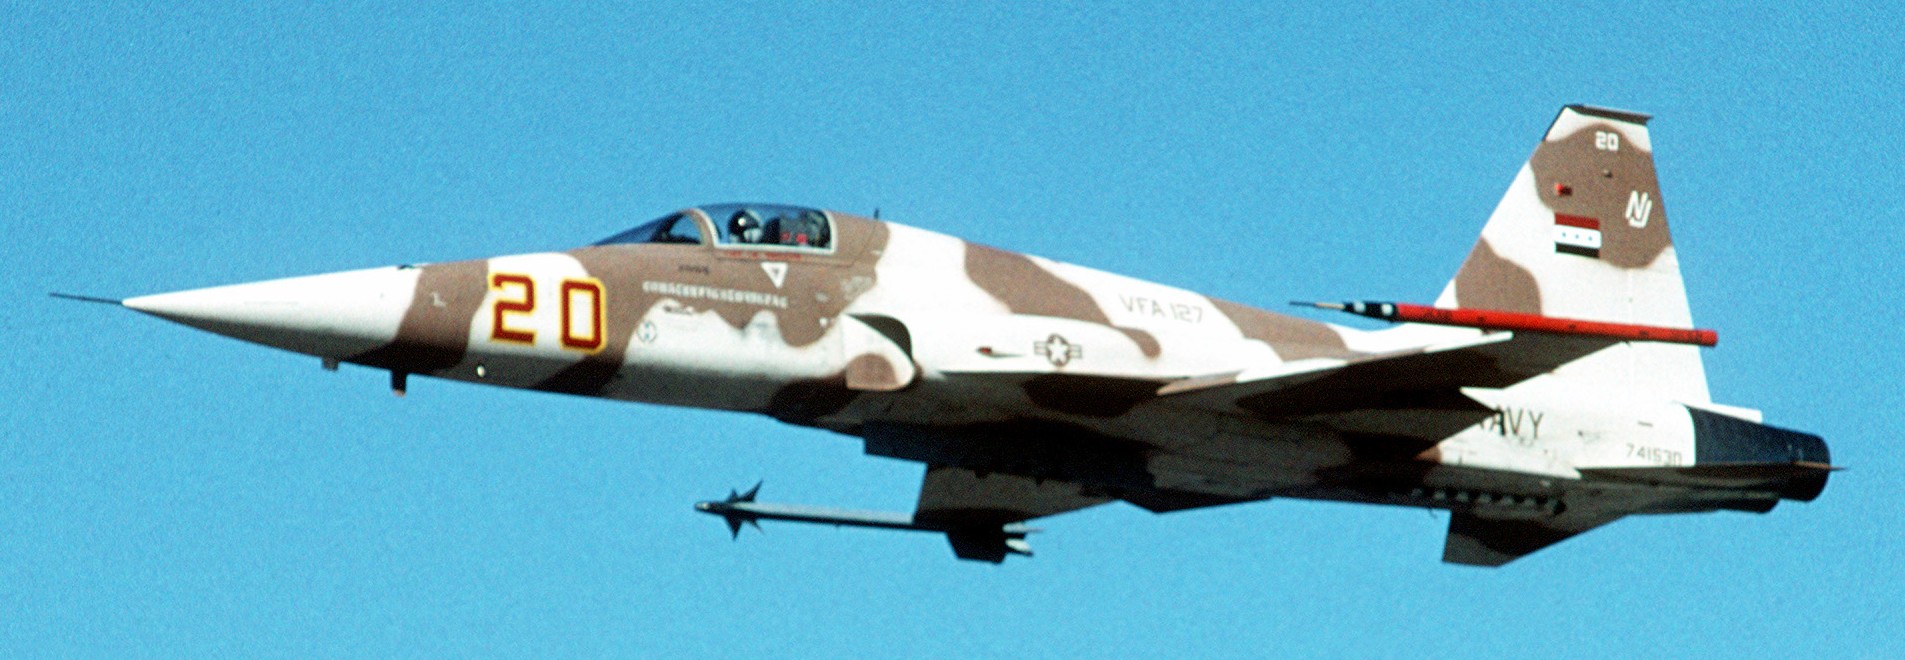 vfa-127 desert bogeys strike fighter squadron f-5e tiger 1993 29 fleet adversary